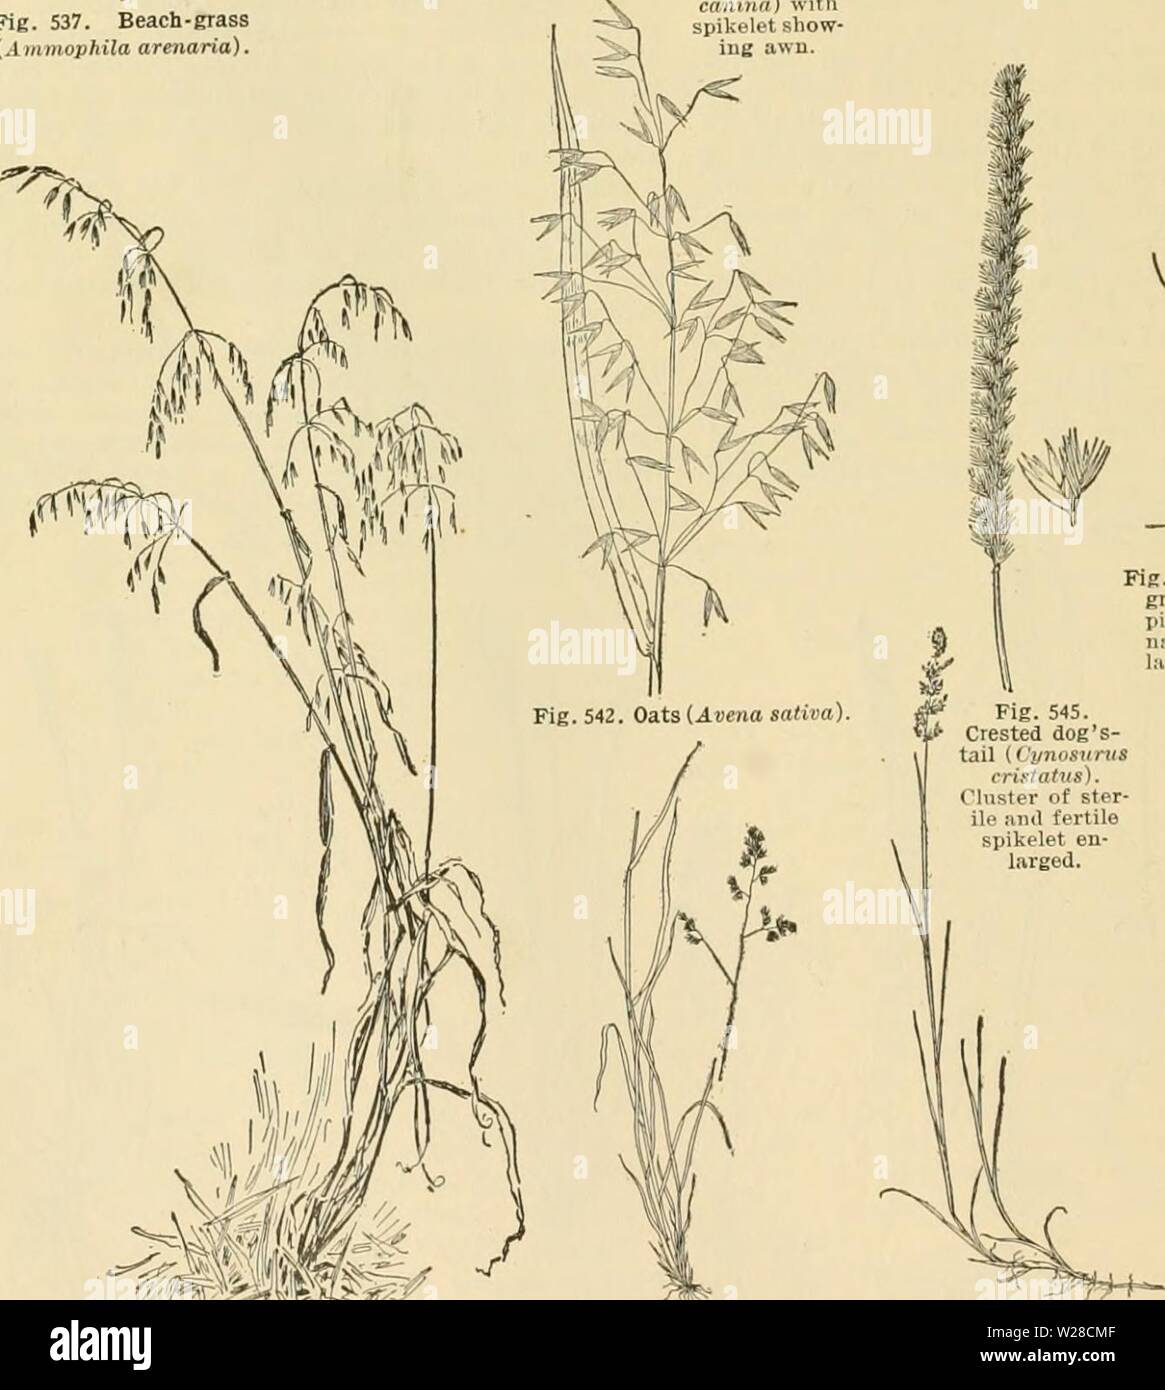 Archive image from page 419 of Cyclopedia of farm crops (1922). Cyclopedia of farm crops  cyclopediaoffarm00bail Year: 1922  Fig. 541. Velvet-grass {Holcus latiatiis). Fig. 538. Red-top {Agrostis alia). Fig. 537. Beach-grass (Ammophila arenaria). Fig. 539. Rhode Island Bent-grass (Agrostis caiiinn) witli spikelet sliow- iug awu. Fig. 540. Bermuda-grass {Cynodon Dactylon),  'im Stock Photo